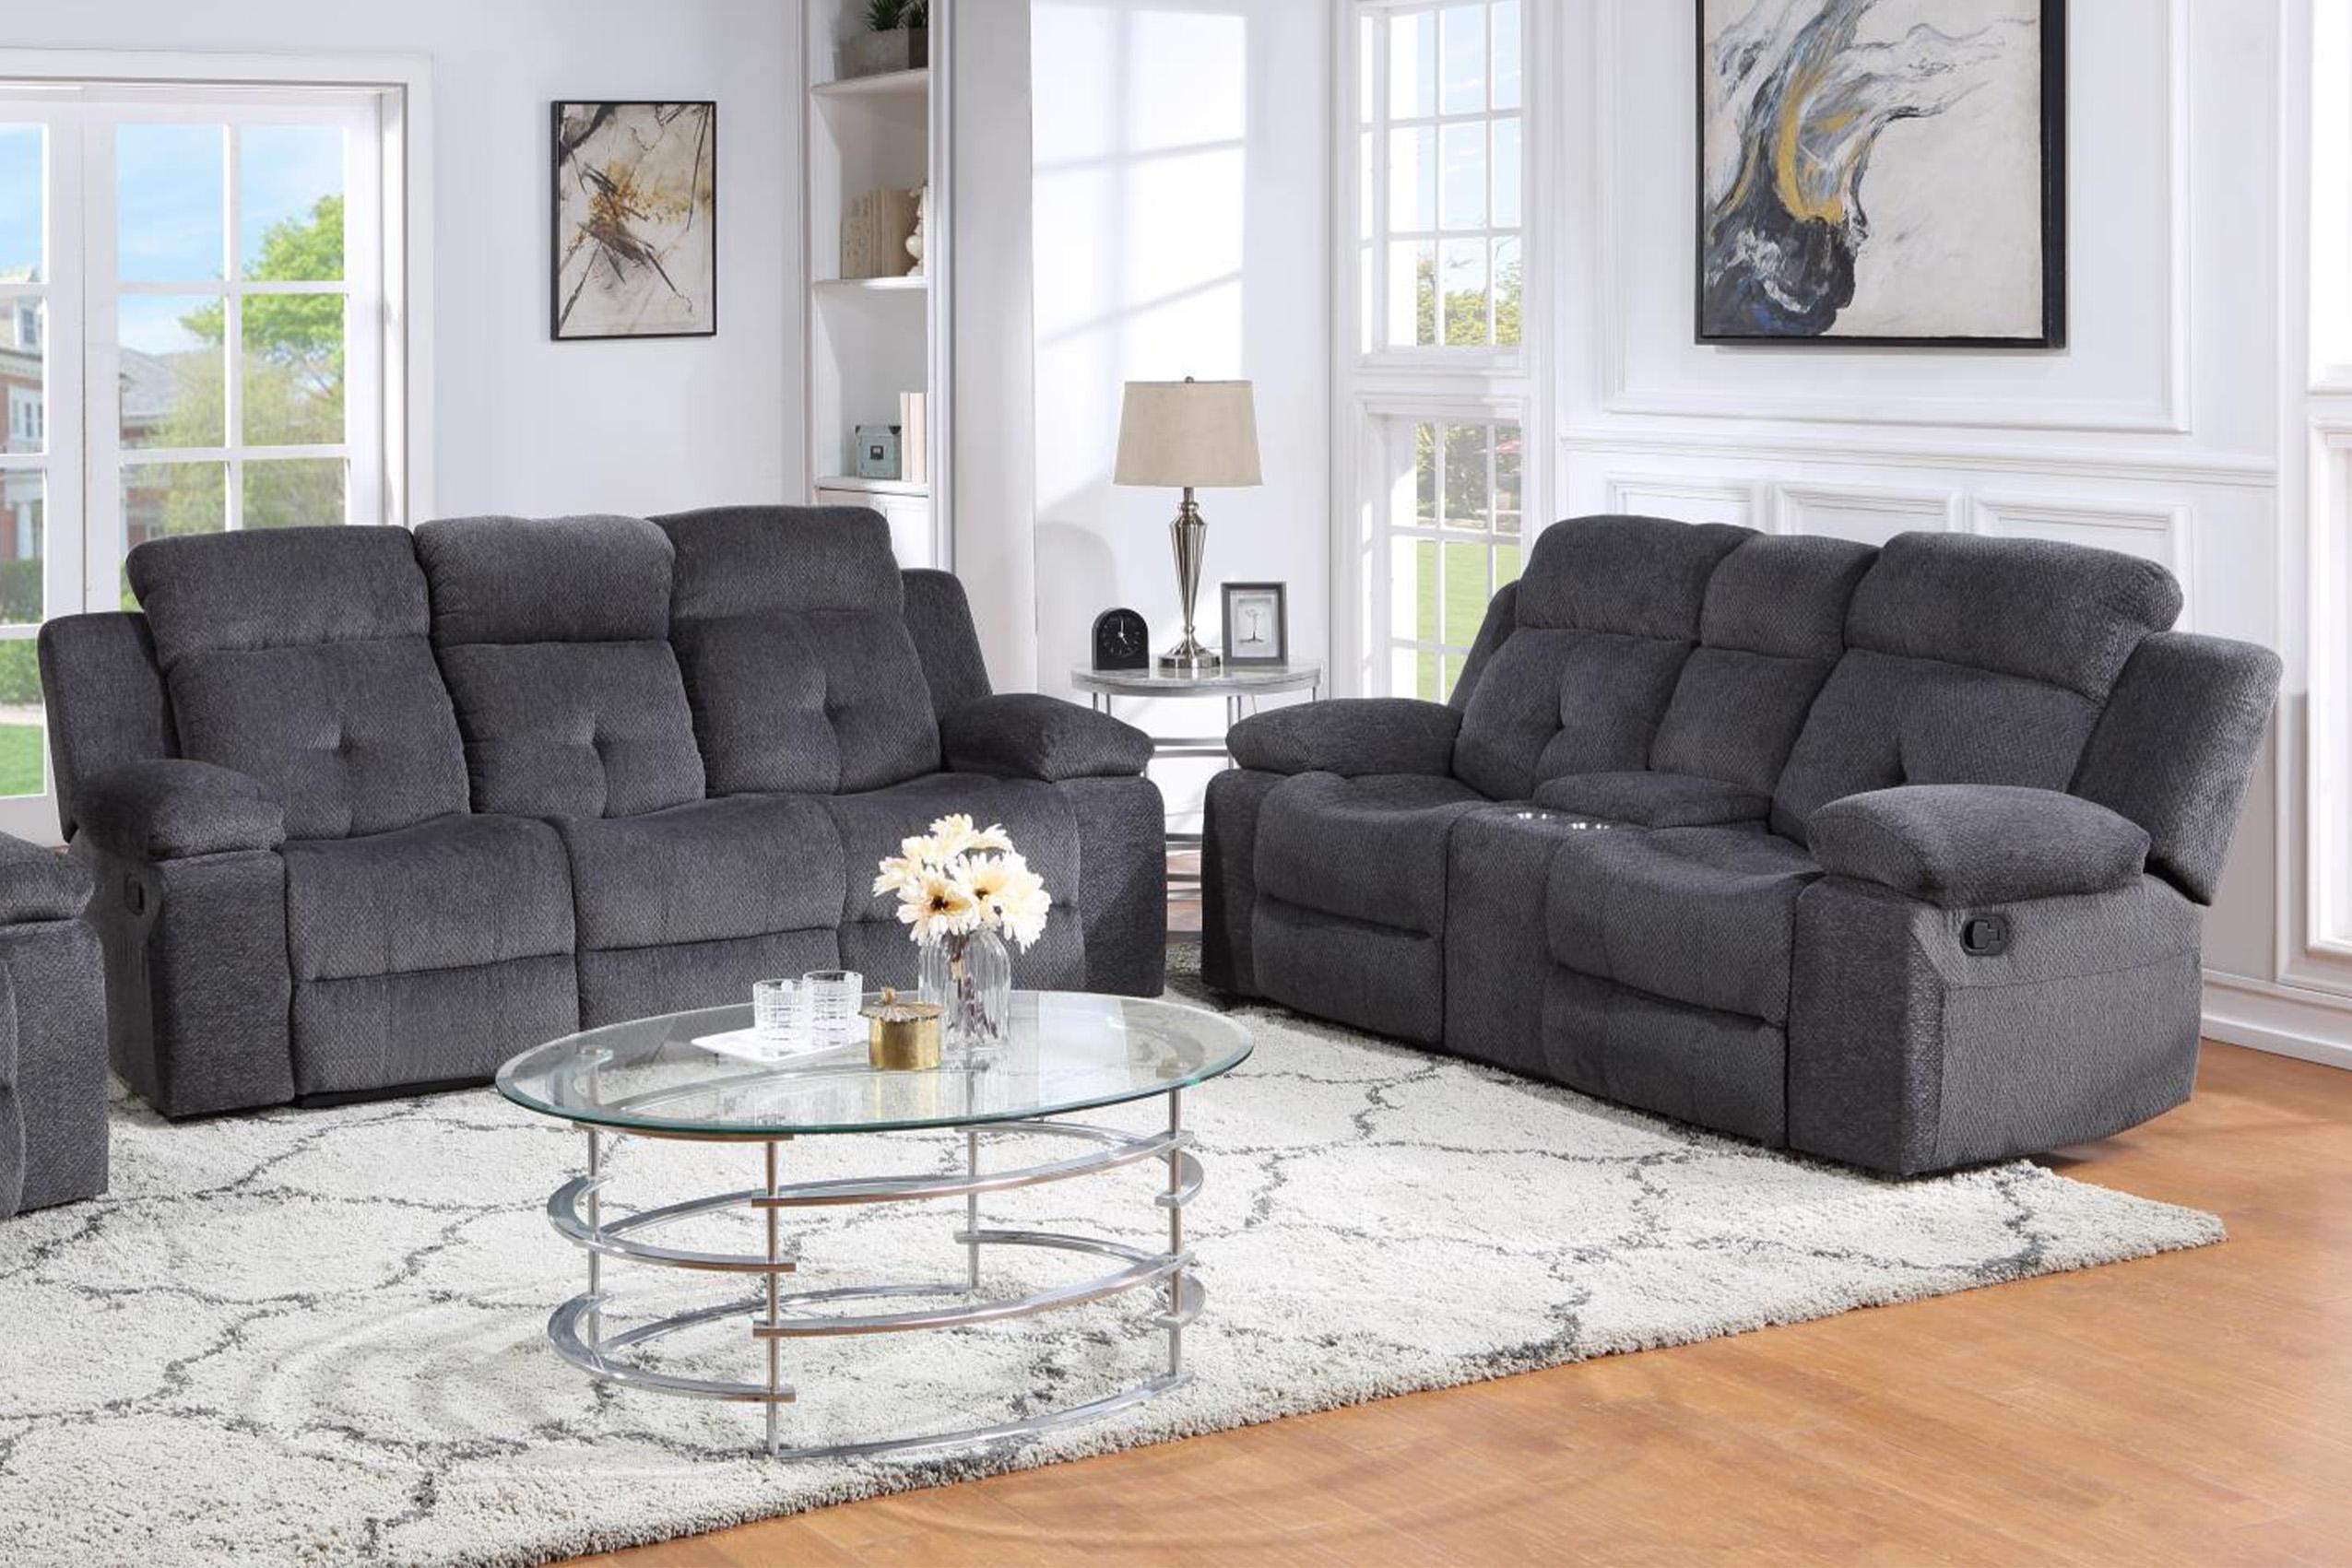 Galaxy Home Furniture PHOENIX Recliner Sofa Set